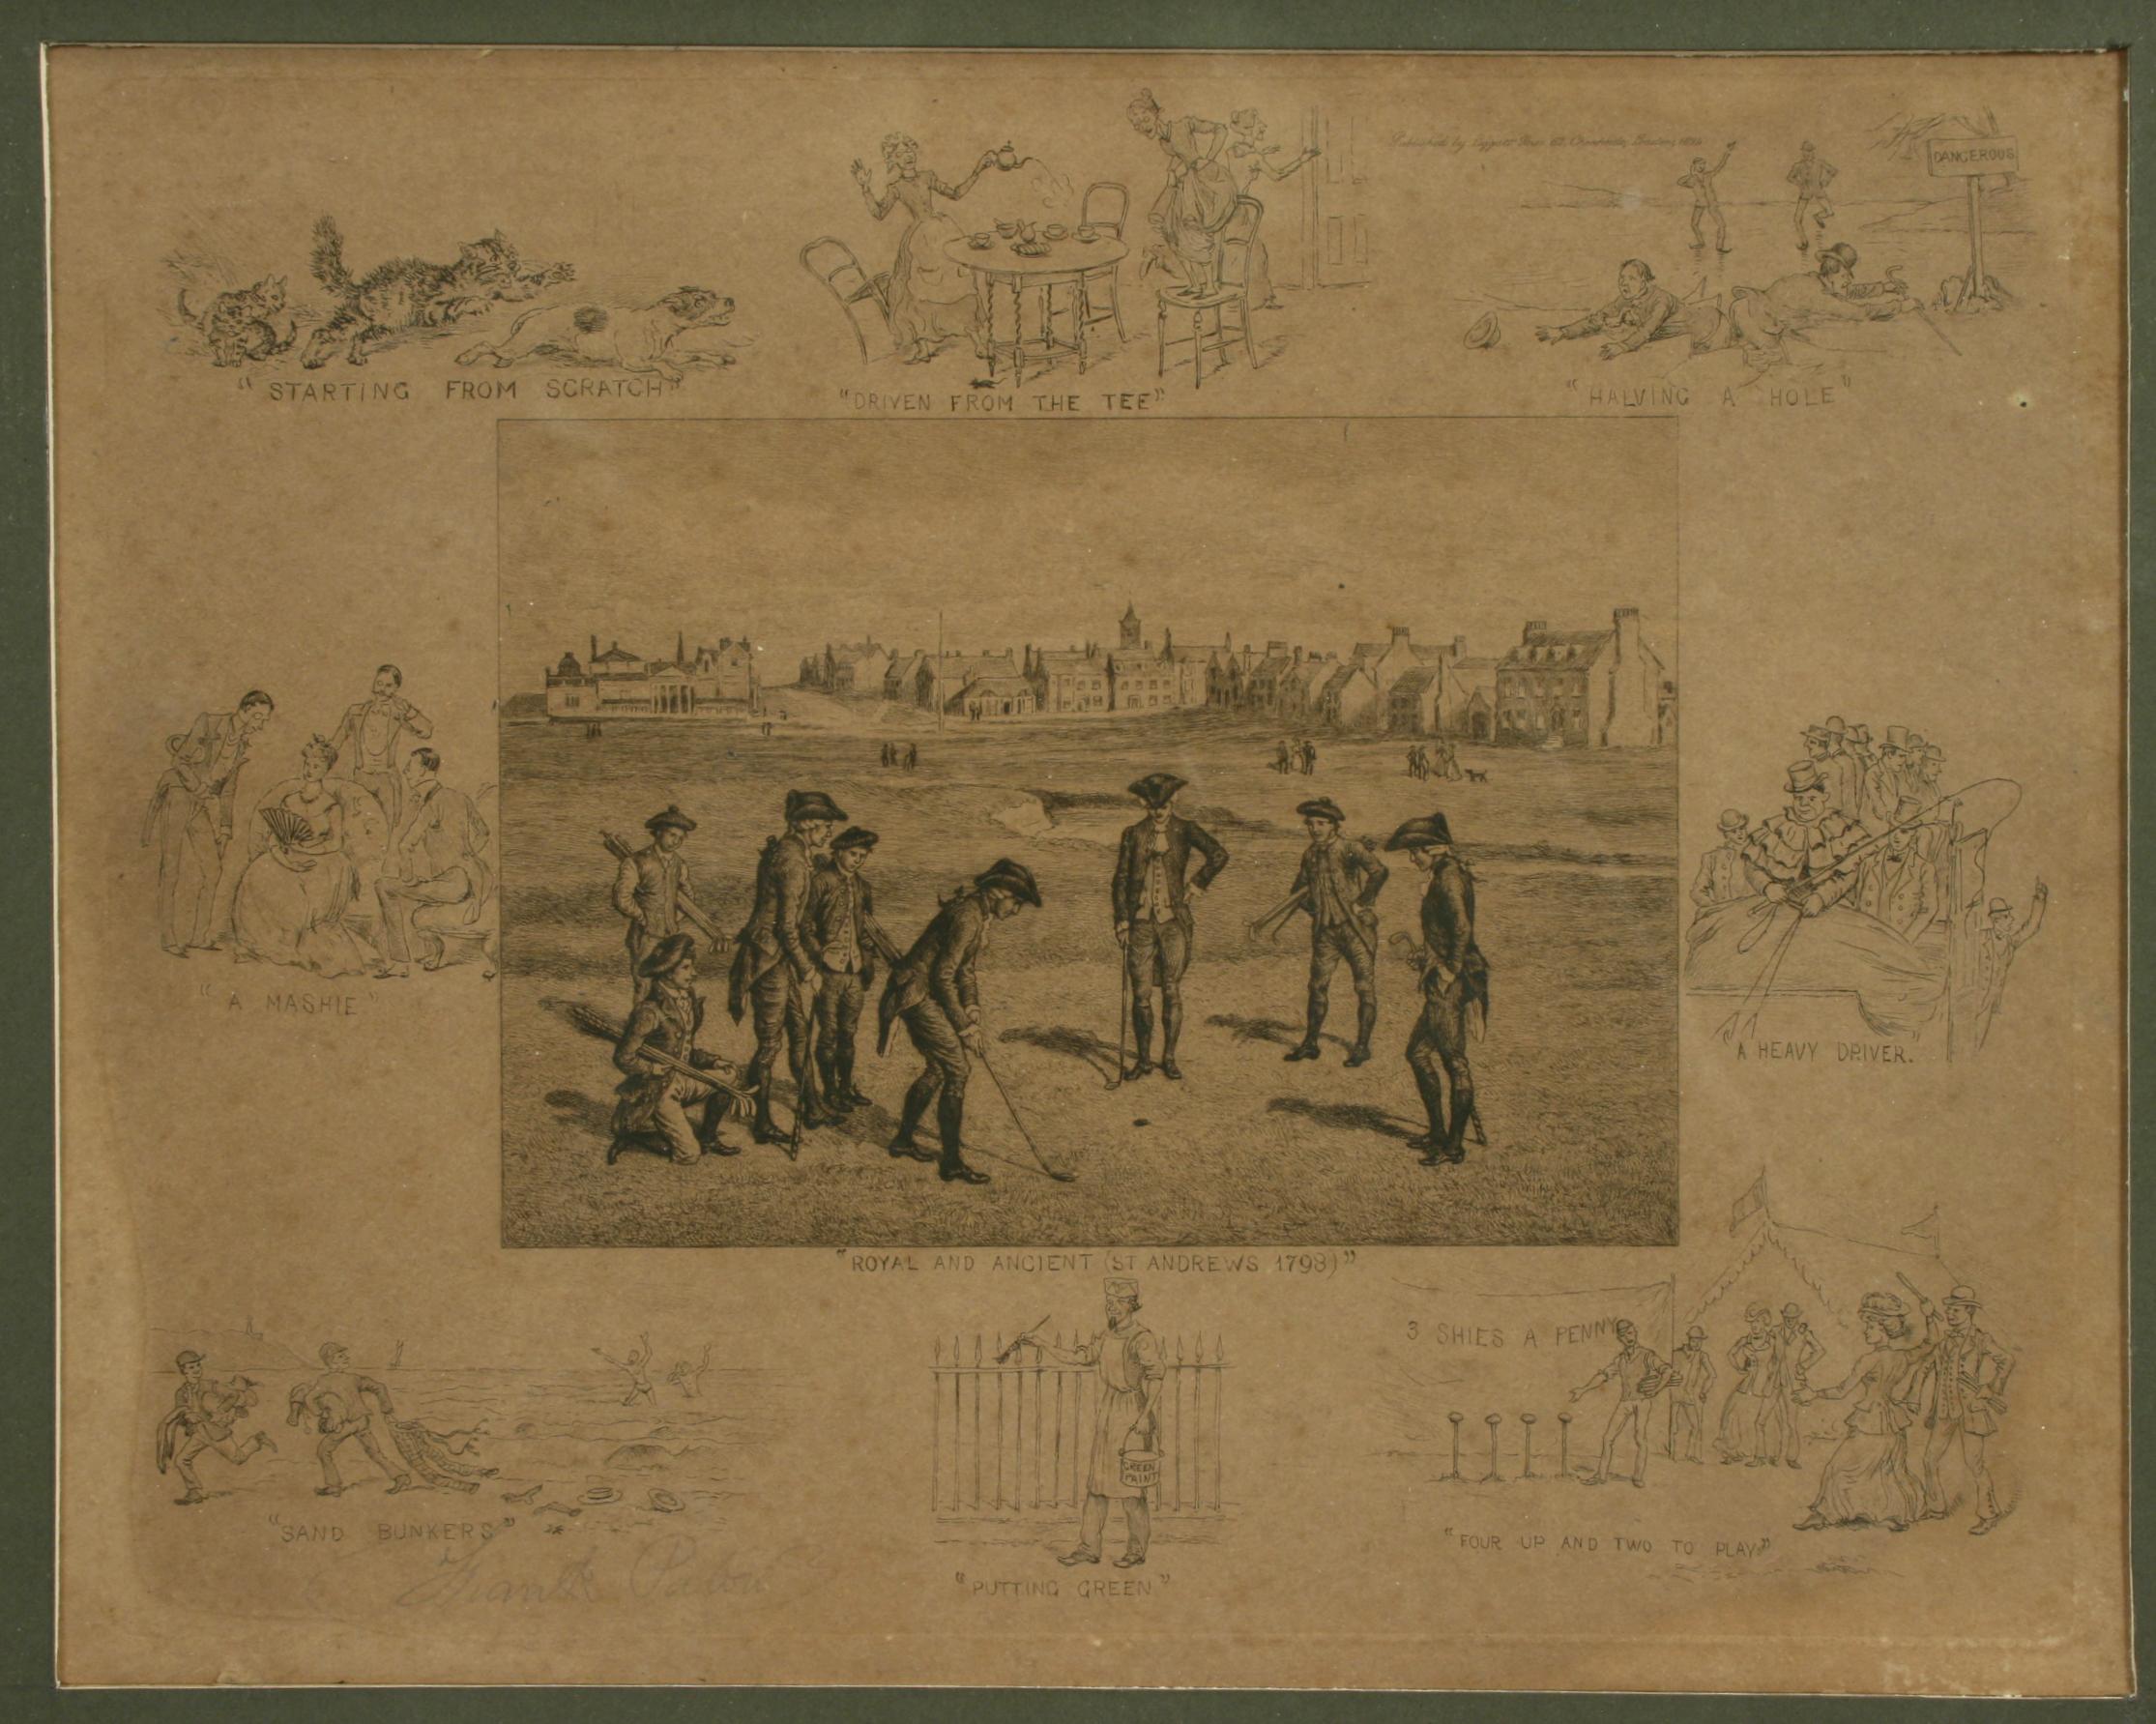 Royal & Ancient Golf Club, St. Andrews.
Golf print, depicting 